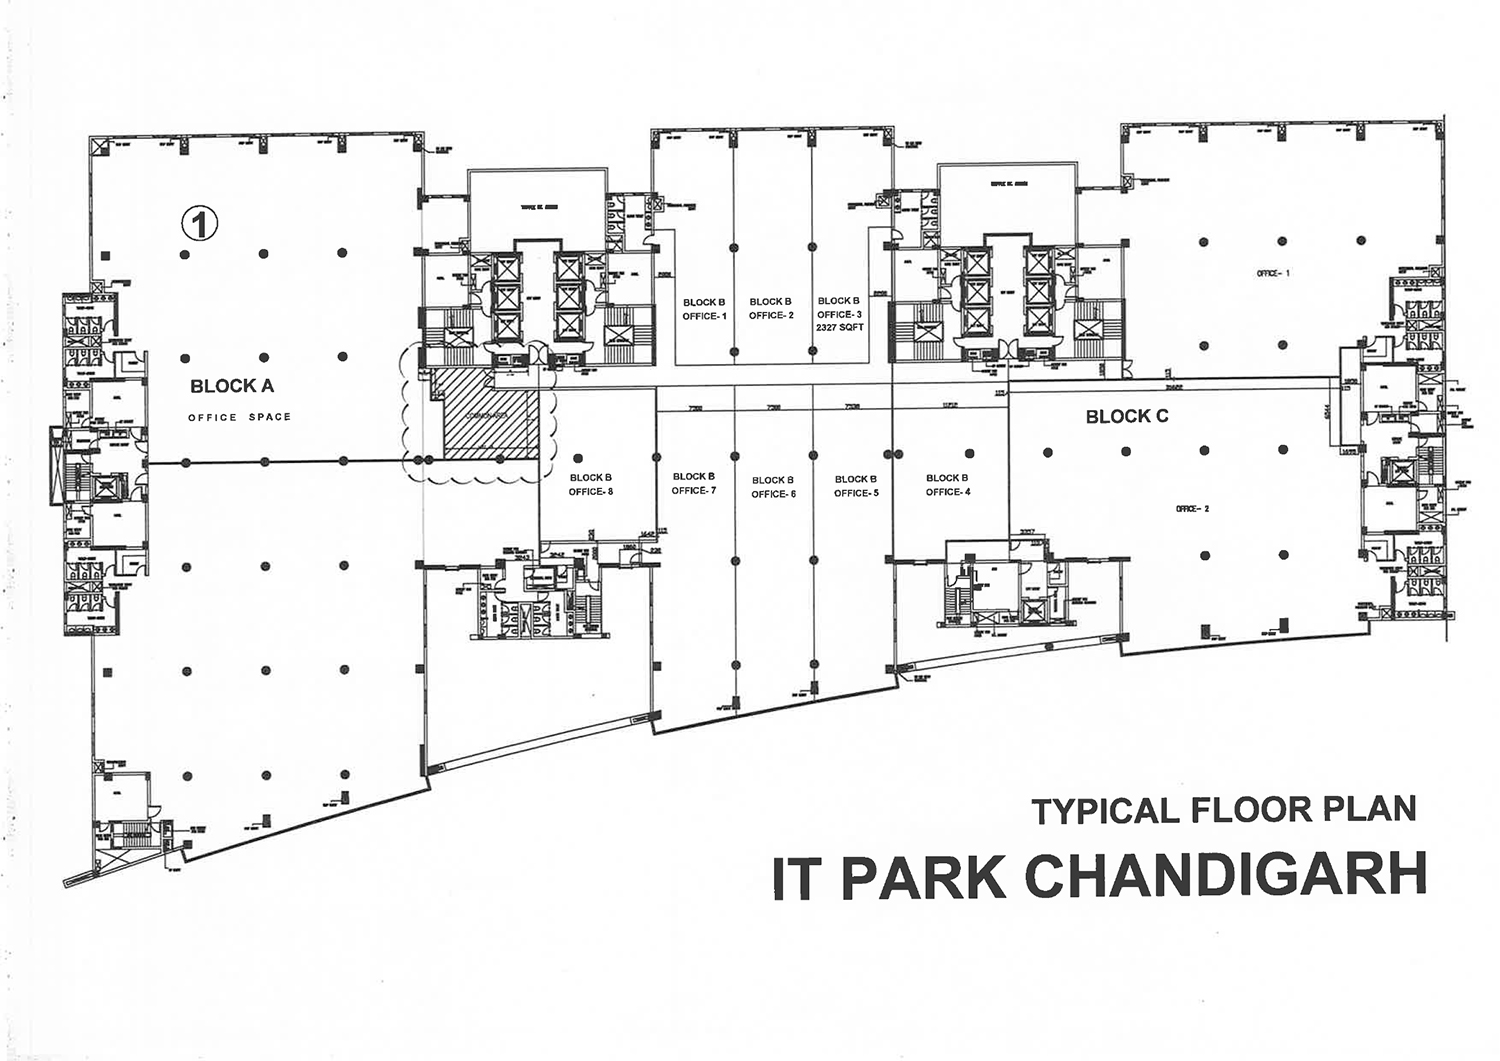 DLF IT Park Chandigarh Luxury Office spaces In IT Park